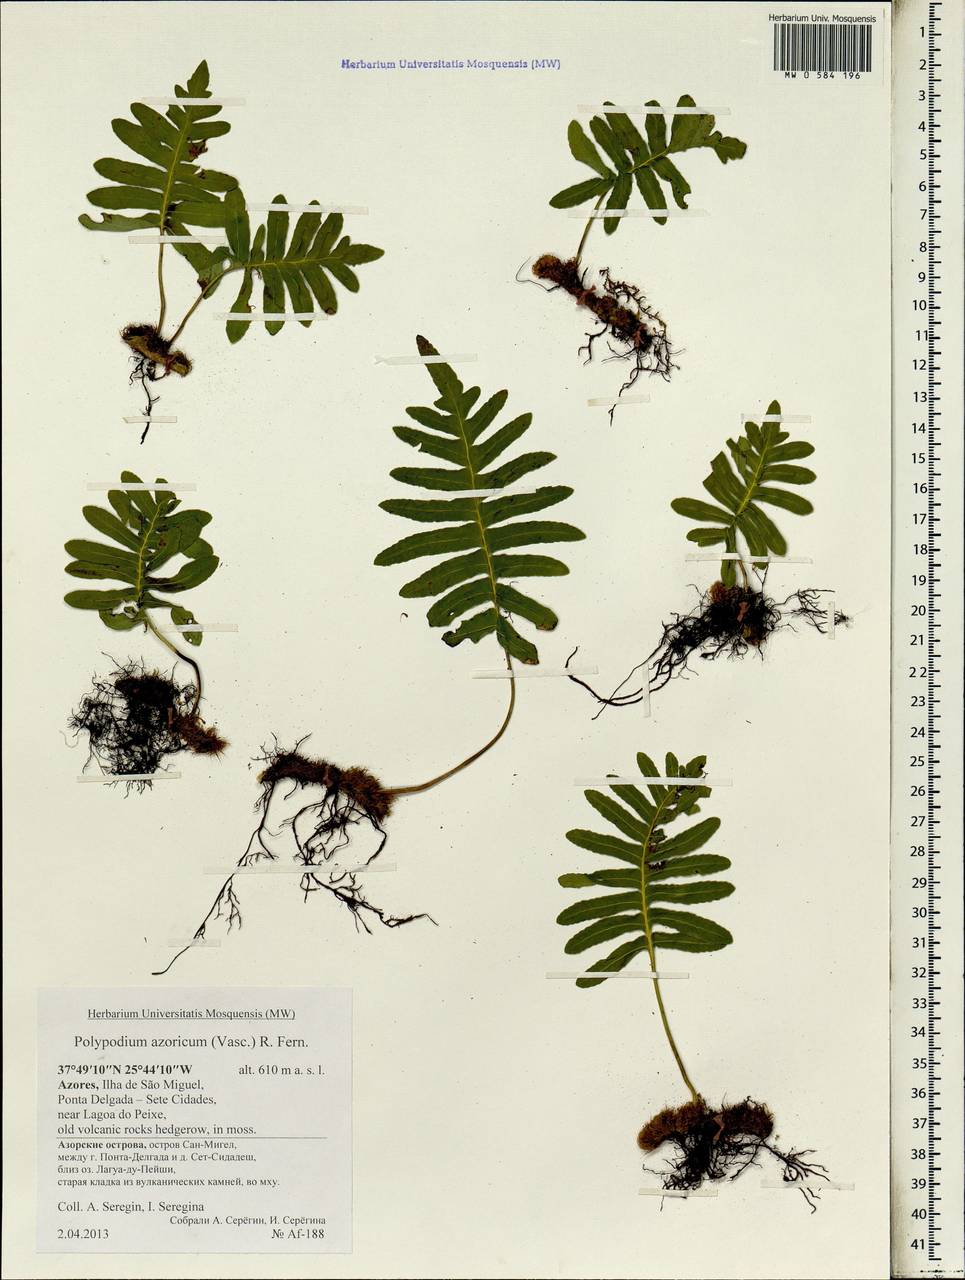 Polypodium macaronesicum subsp. azoricum (Vasc.) F. J. Rumsey, Carine & Robba, Африка (AFR) (Португалия)